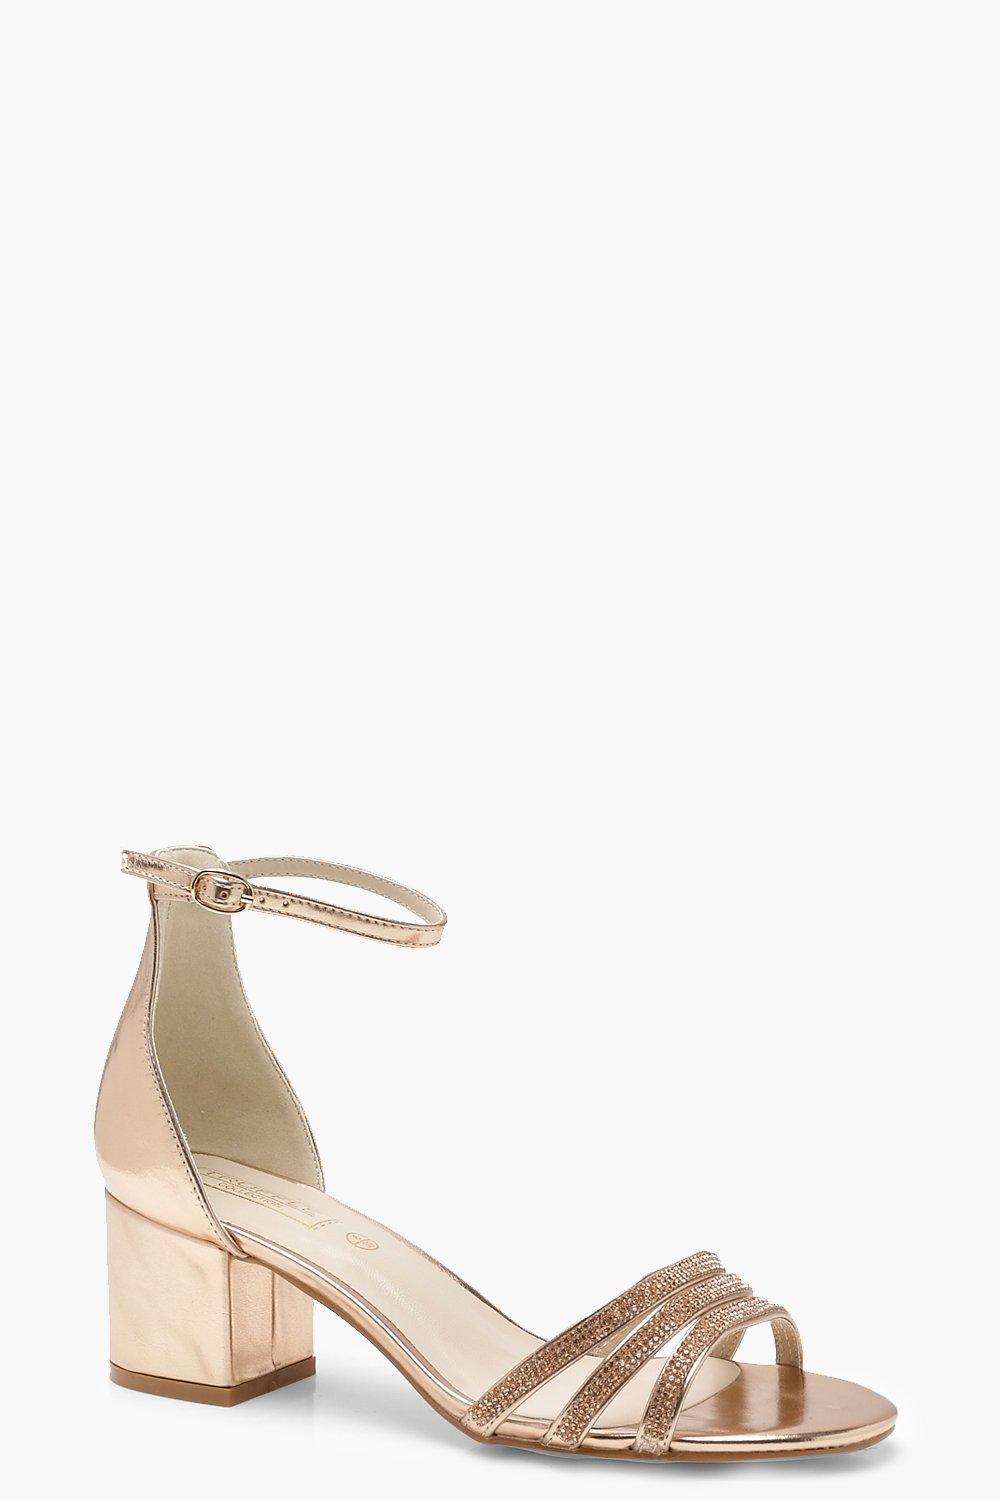 gold low heel shoes uk